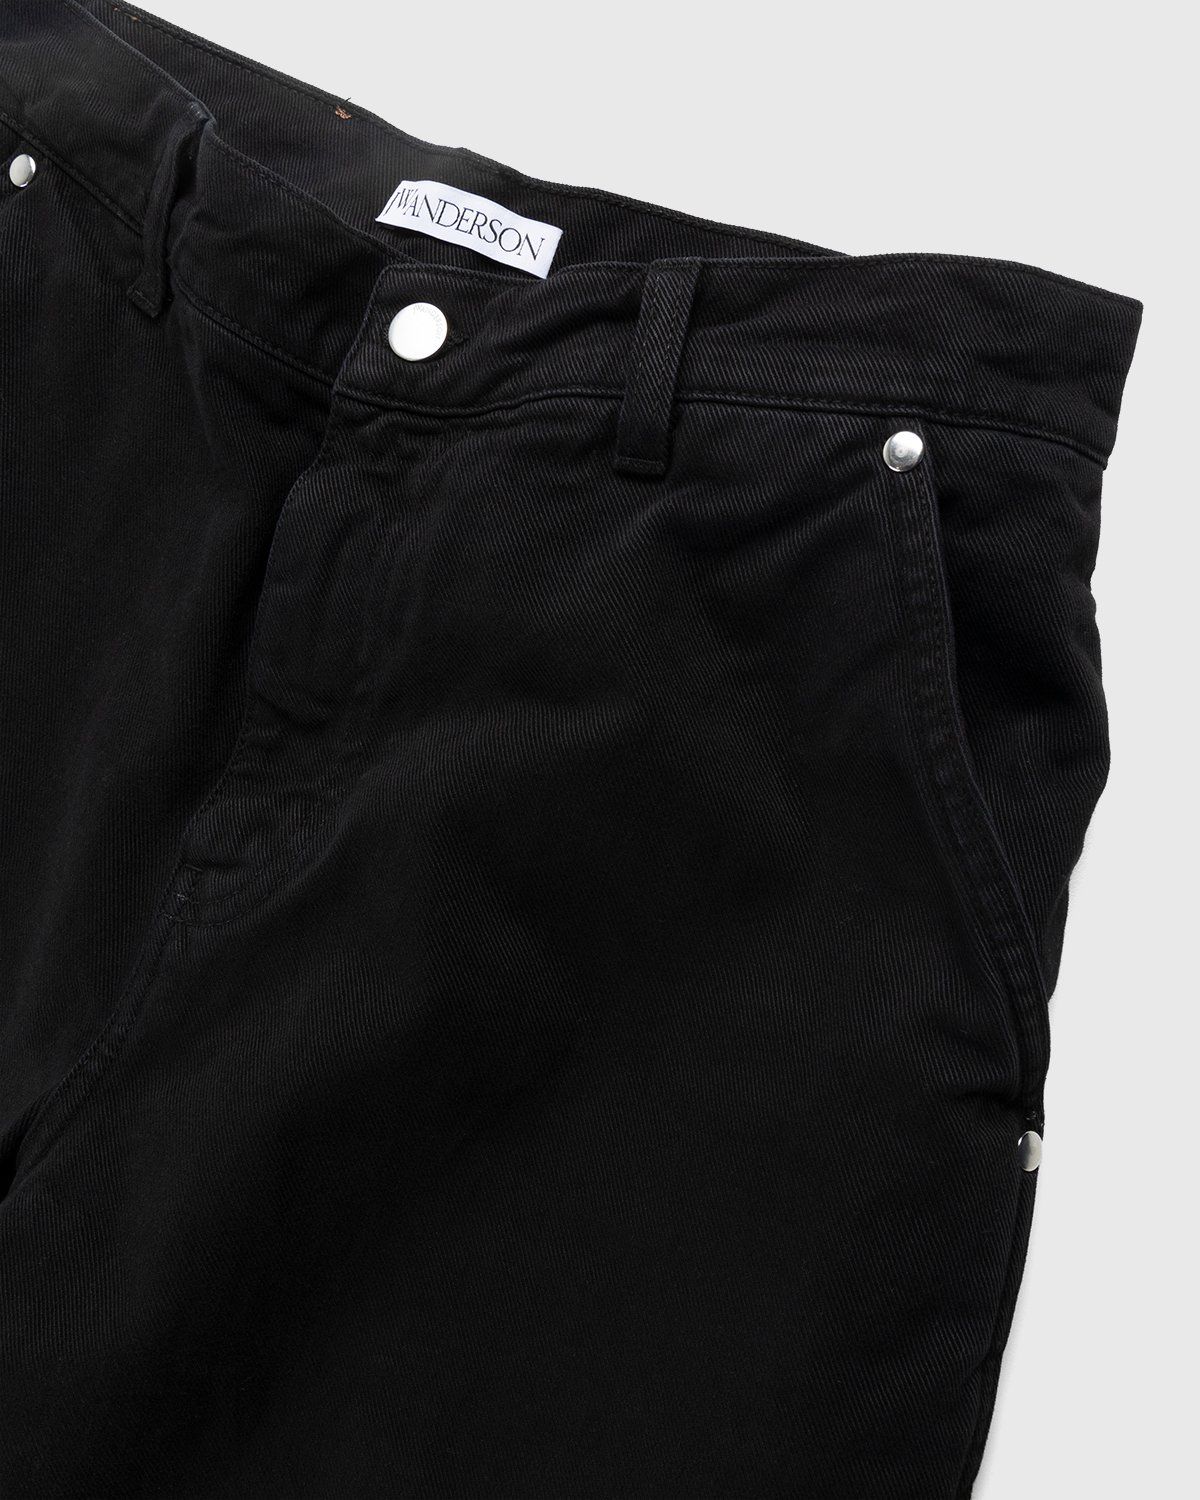 J.W. Anderson – Logo Grid Cuff Wide Leg Jeans Black - Pants - Black - Image 4